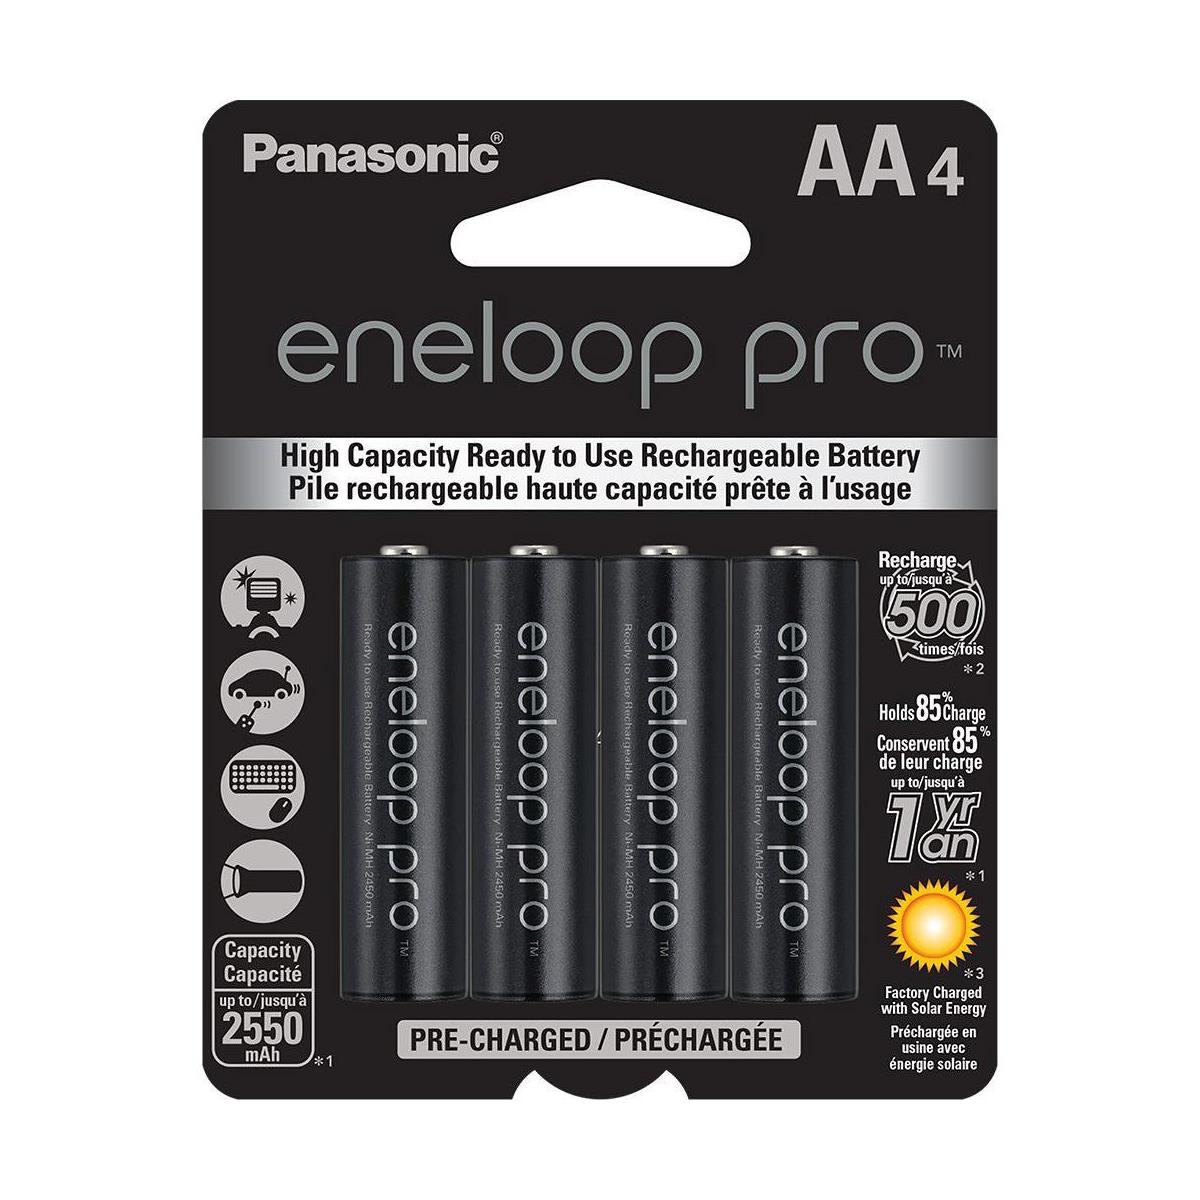 Panasonic Eneloop Pro AA 4pack Rechargeable Ni-MH Batteries (2550 mAh)